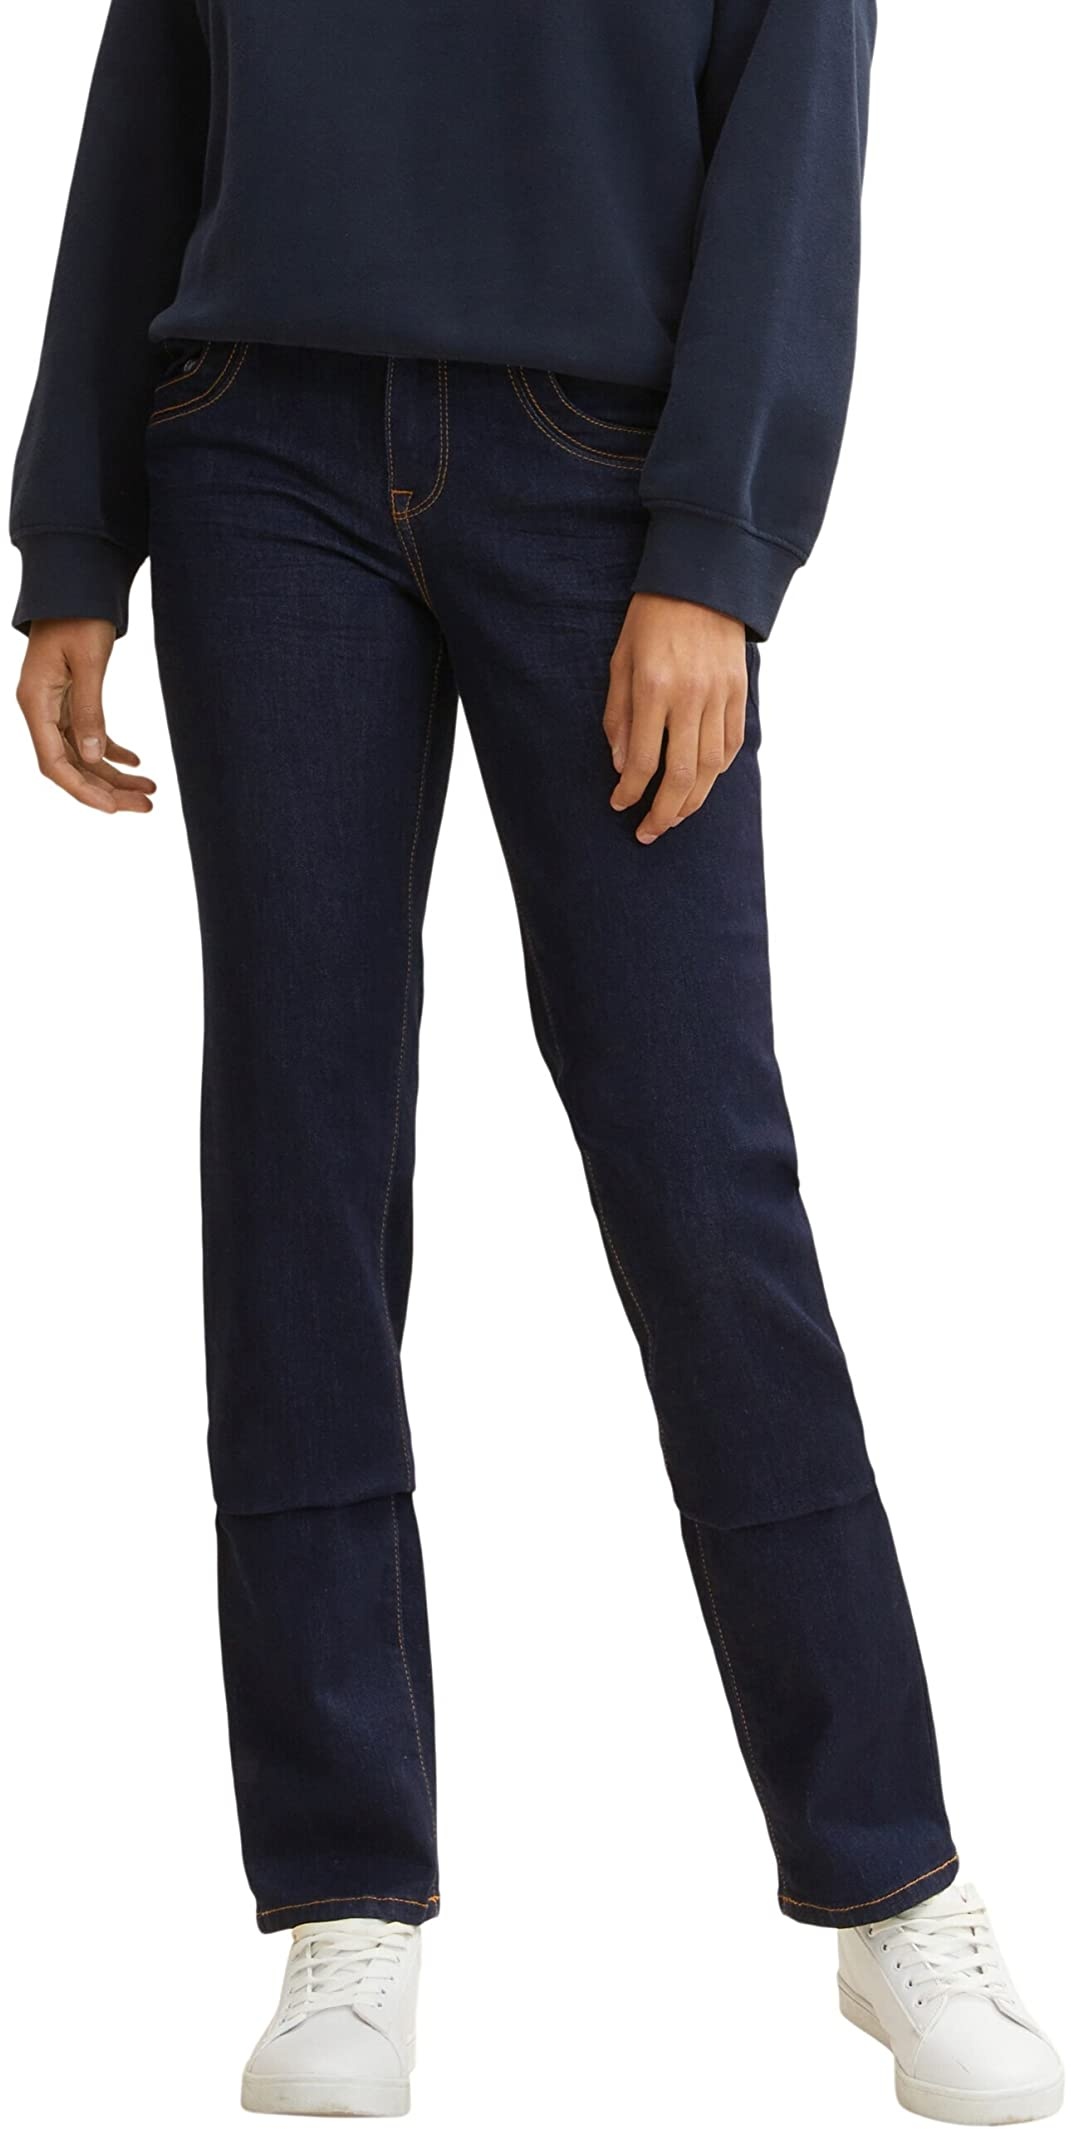 TOM TAILOR Damen 1008146 Alexa Straight Jeans, 10138 - Rinsed Blue Denim, 29W / 34L EU